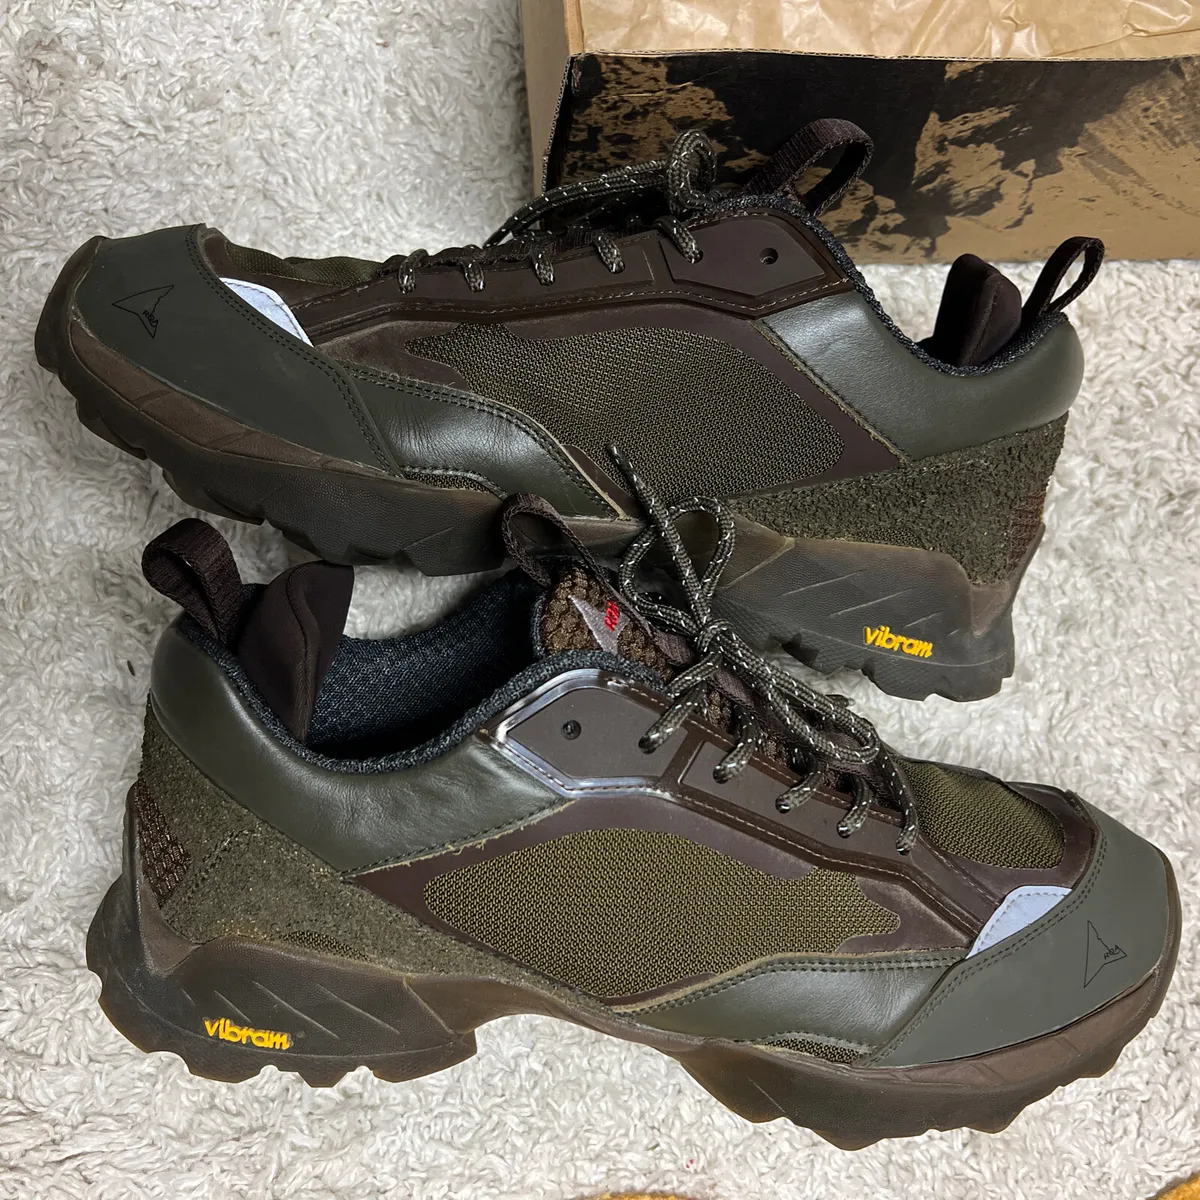 tyran Vice hul ROA Hiking - Lhakpa - sneaker 45 US 12 Brown Military | eBay